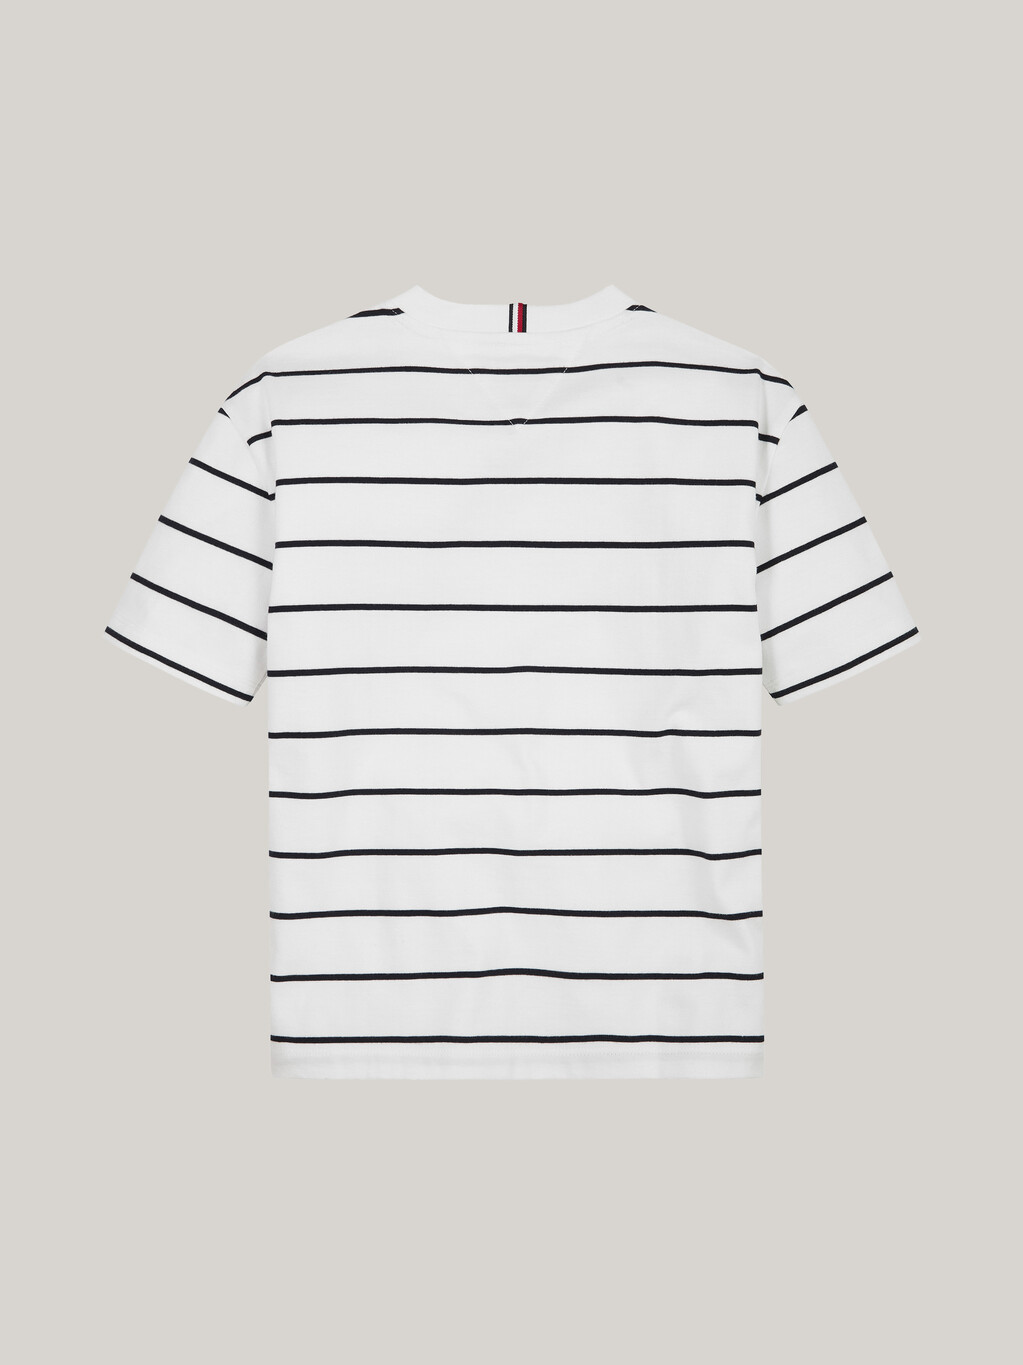 Stripe Flag Embroidery T-Shirt, White Base/Blue Stripe, hi-res